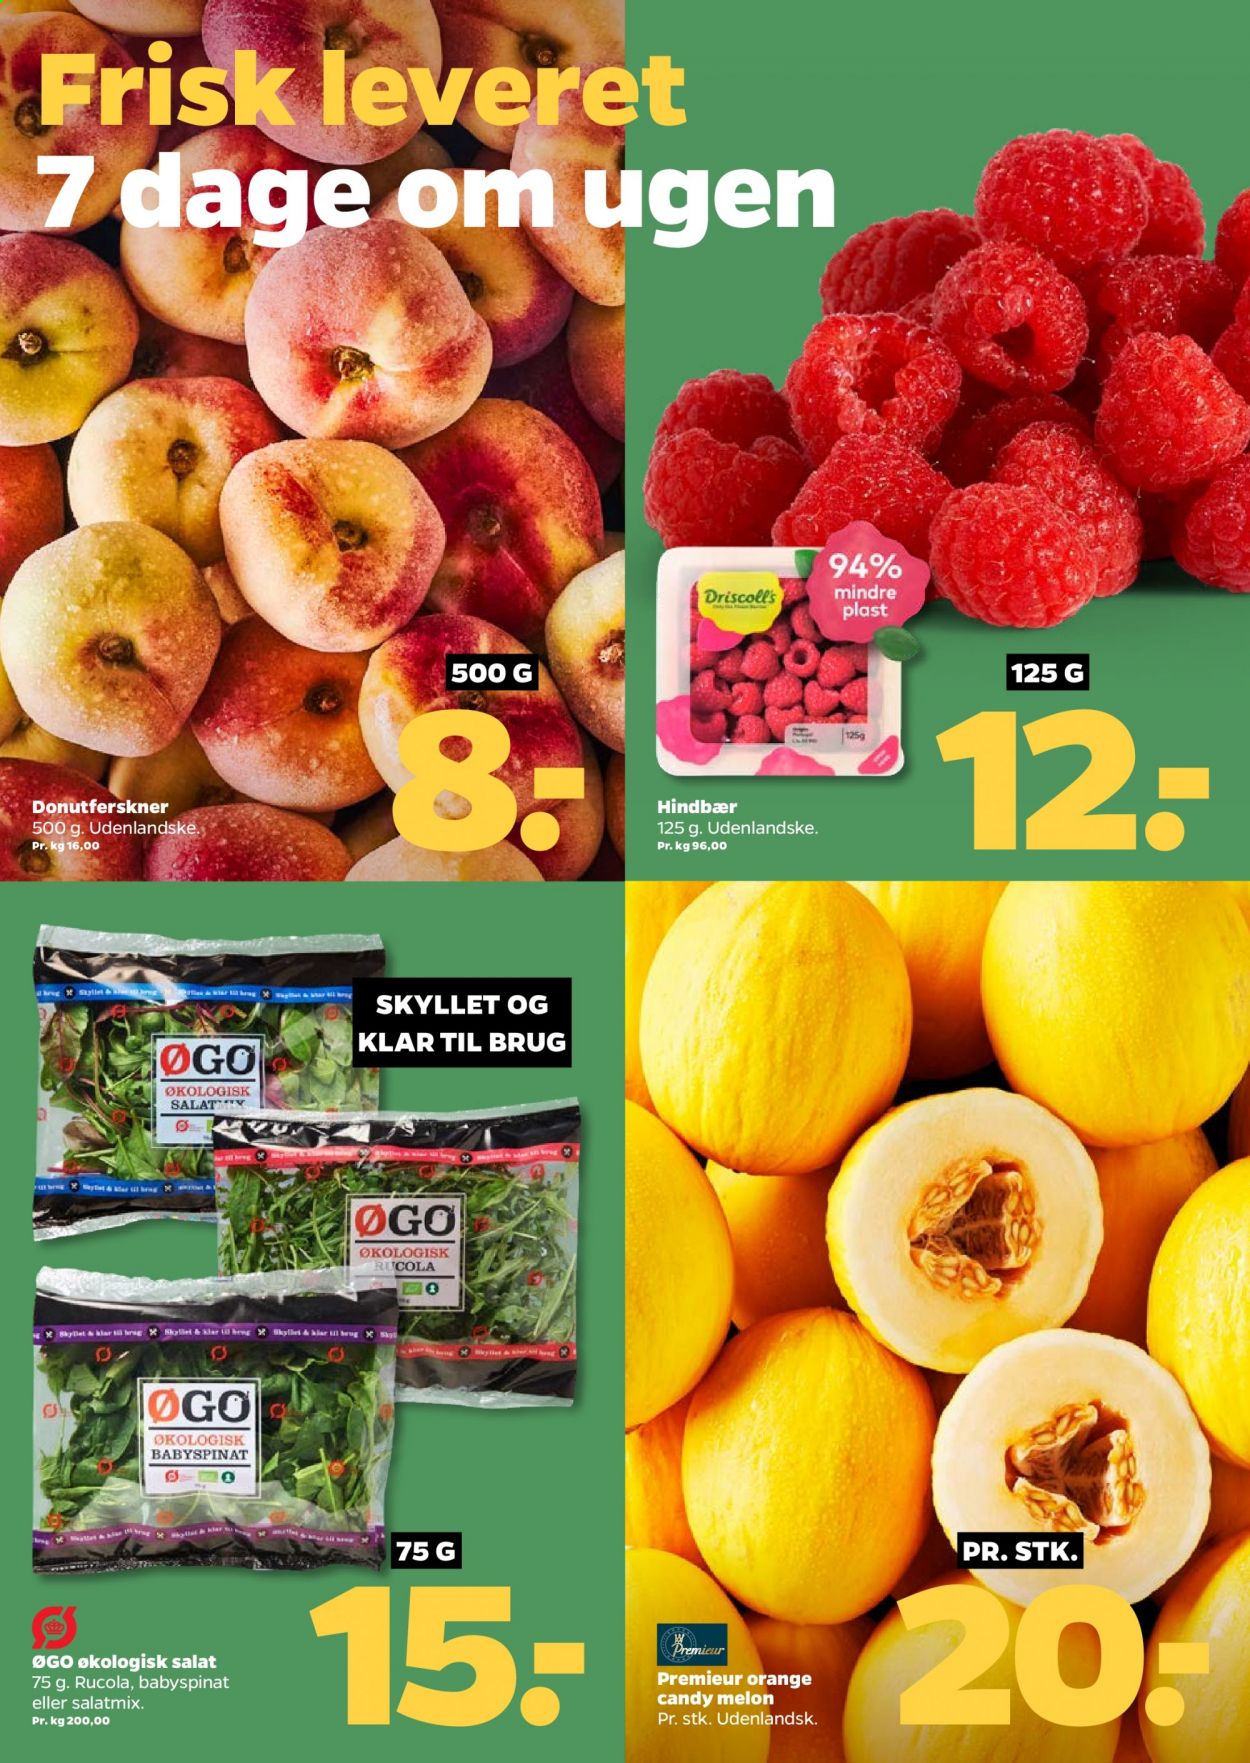 thumbnail - Netto tilbud  - 17.7.2021 - 23.7.2021 - tilbudsprodukter - hindbær, melon, rucola, salat. Side 8.